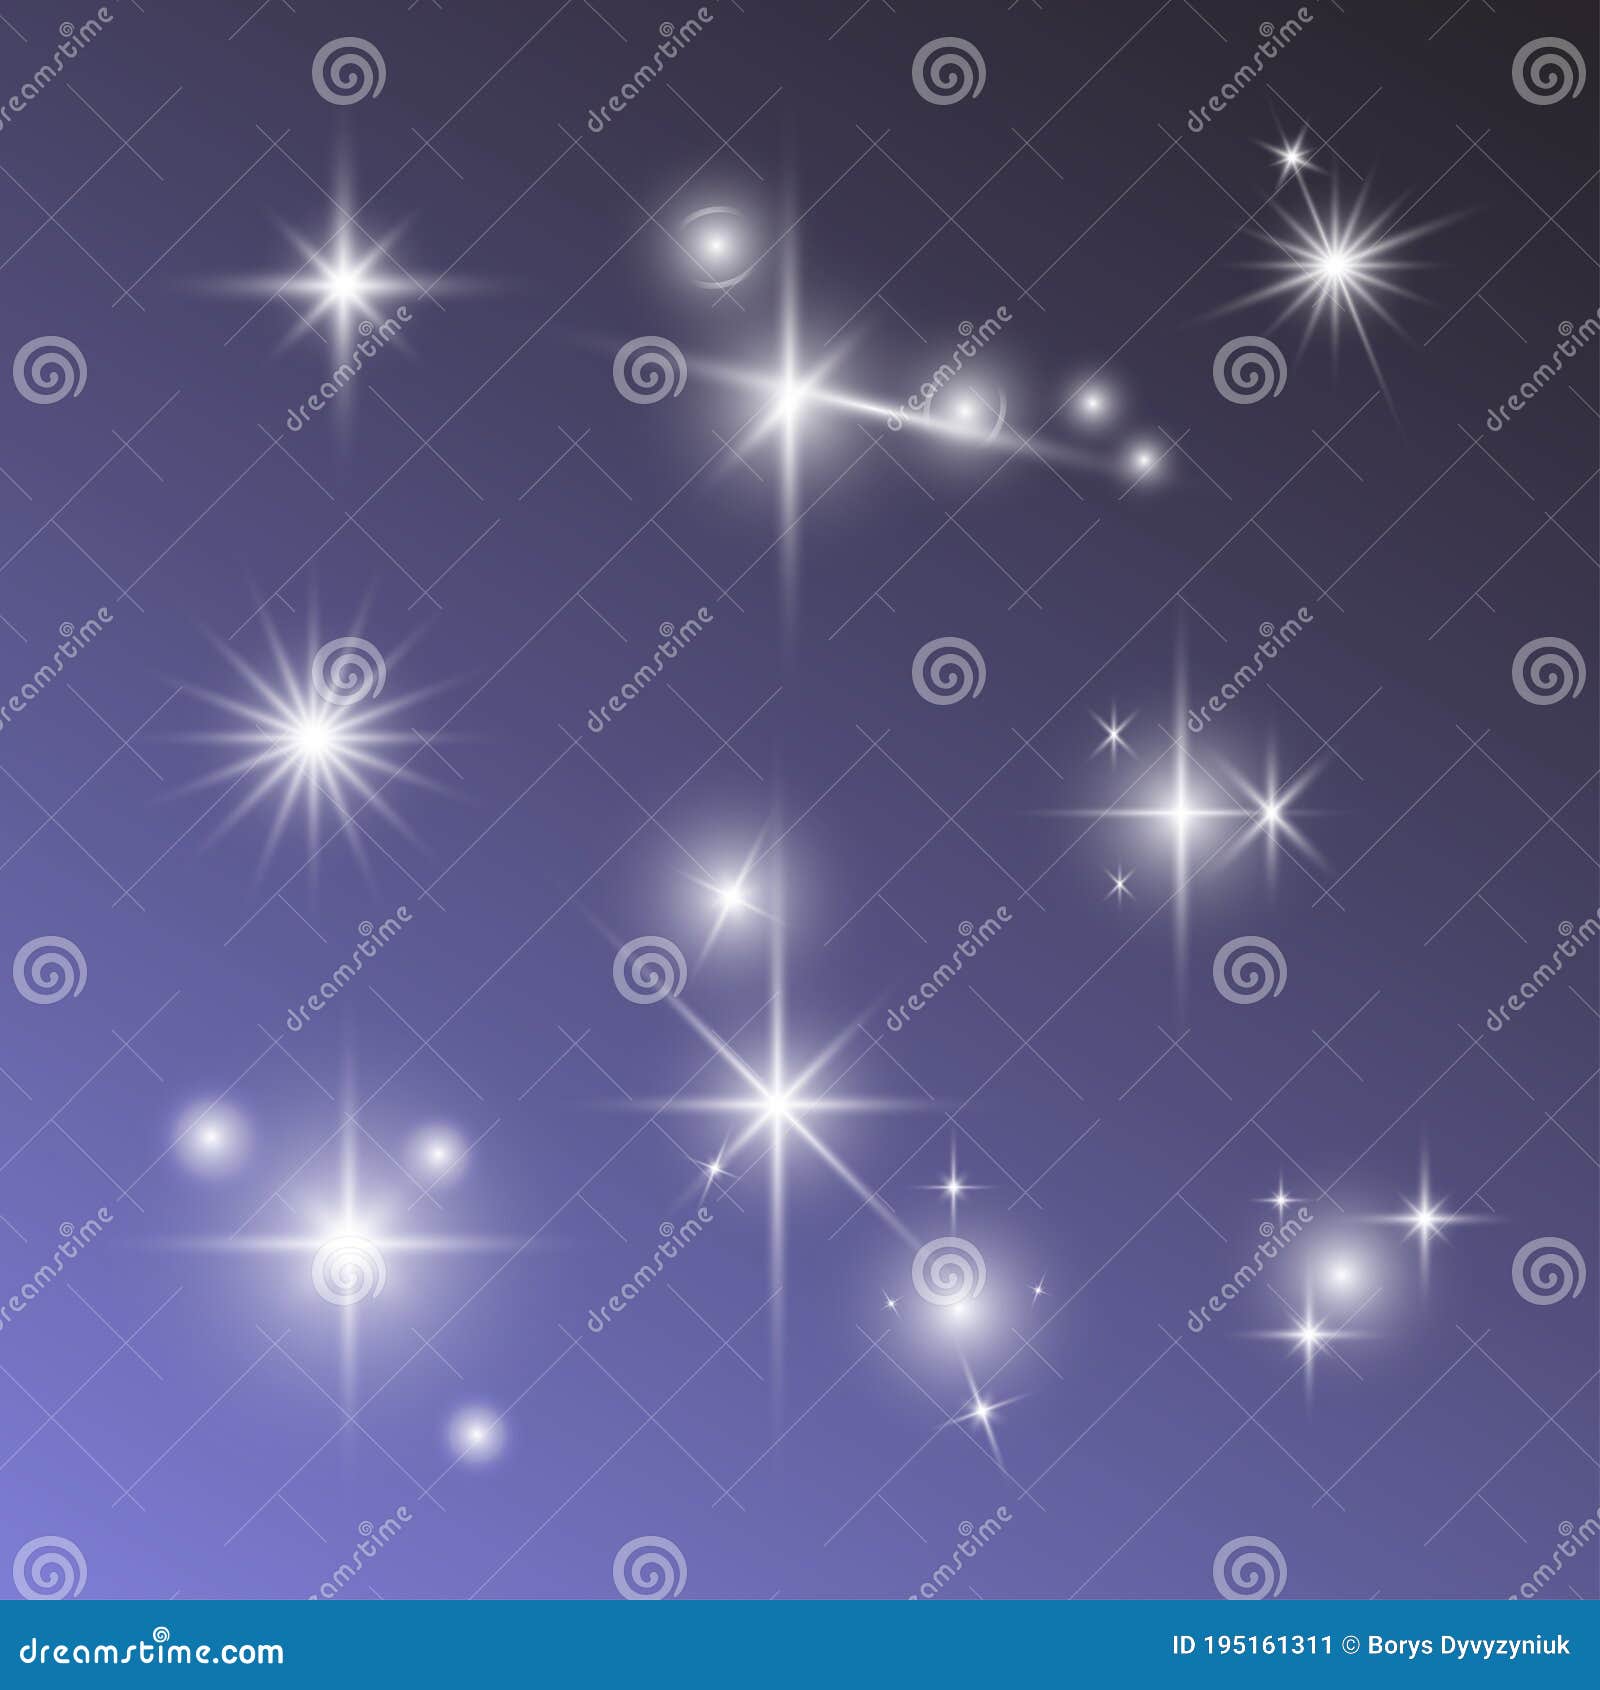 sparkly starlight set